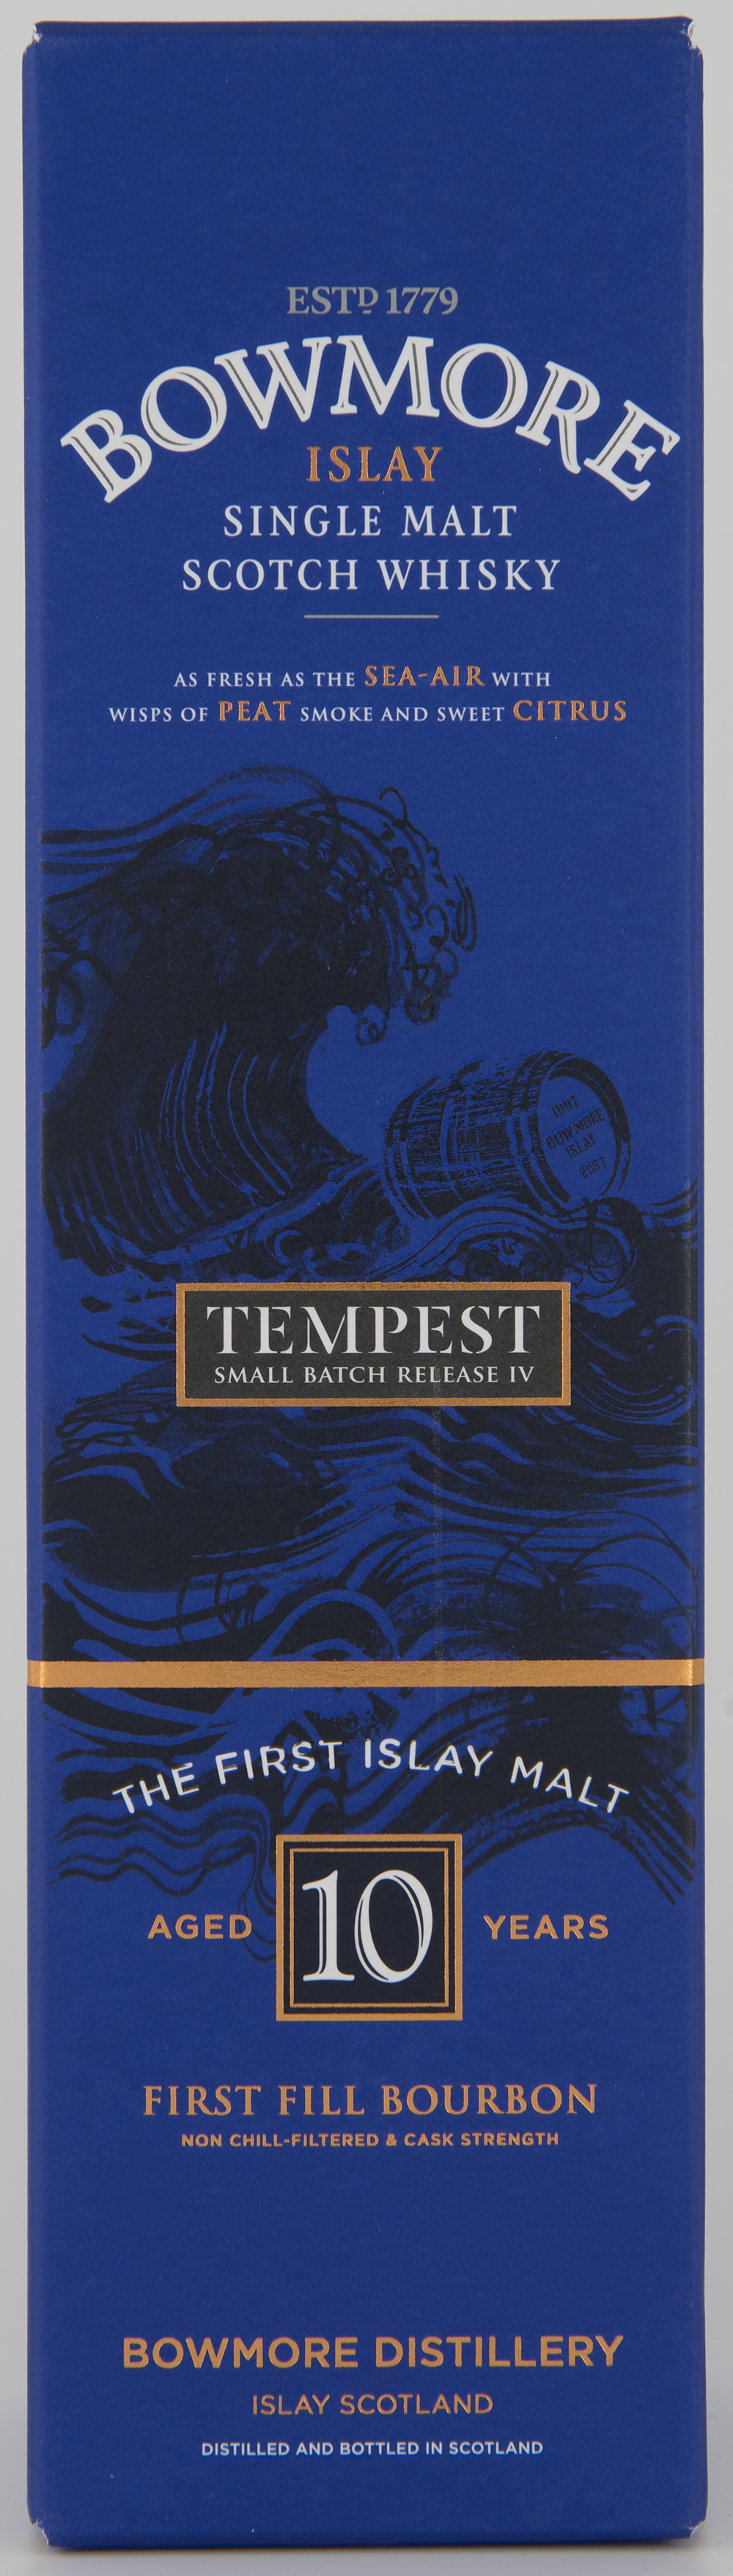 Billede: DSC_3203 Bowmore Tempest Batch IV - box front.jpg